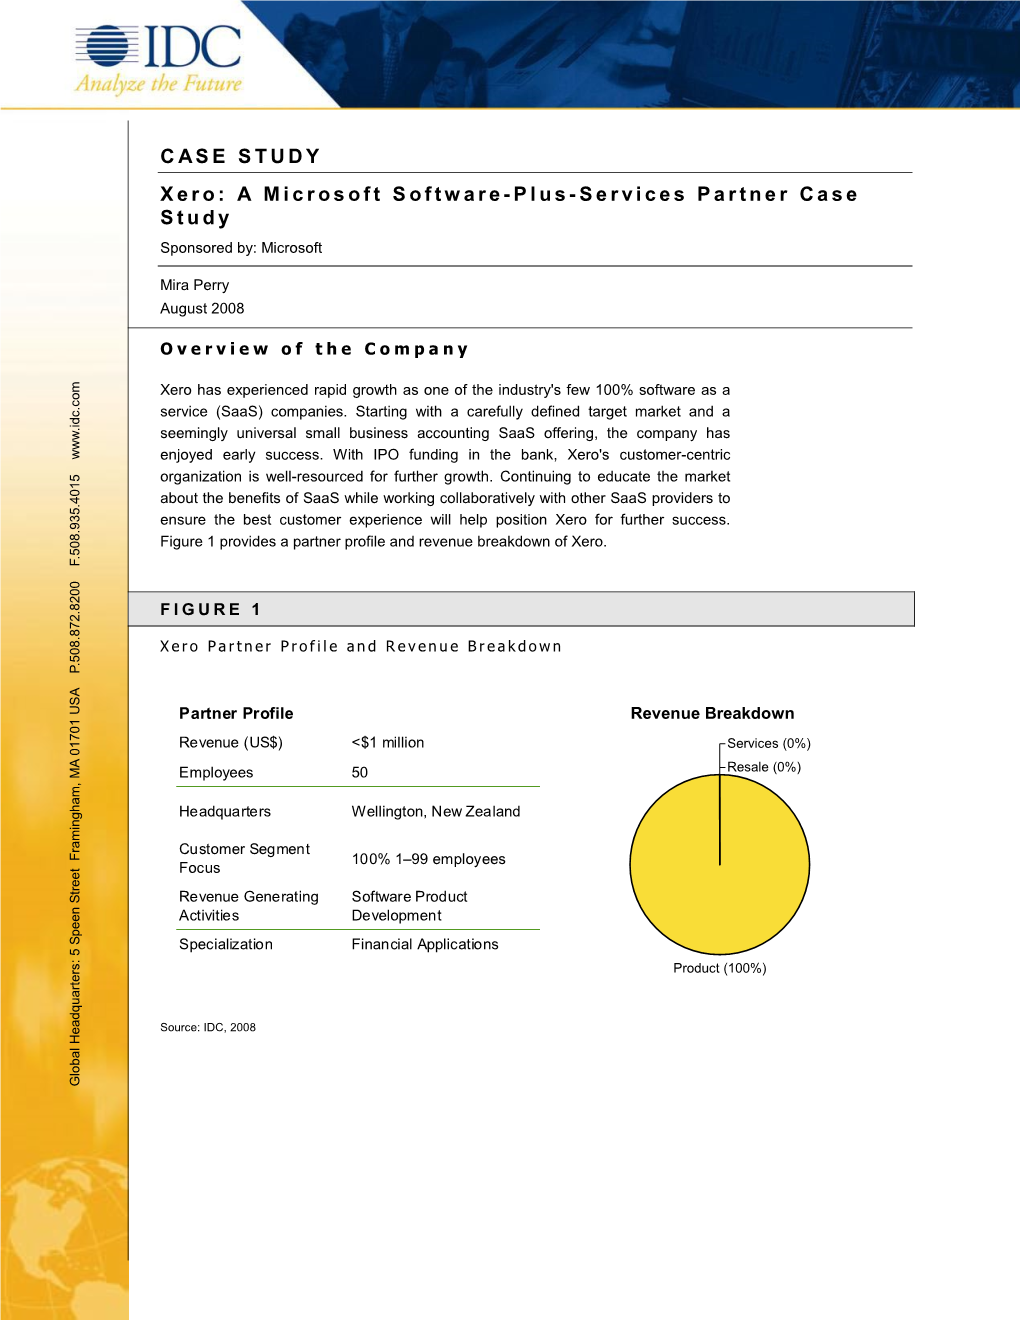 CASE STUDY Xero: a Microsoft Software-Plus-Services Partner